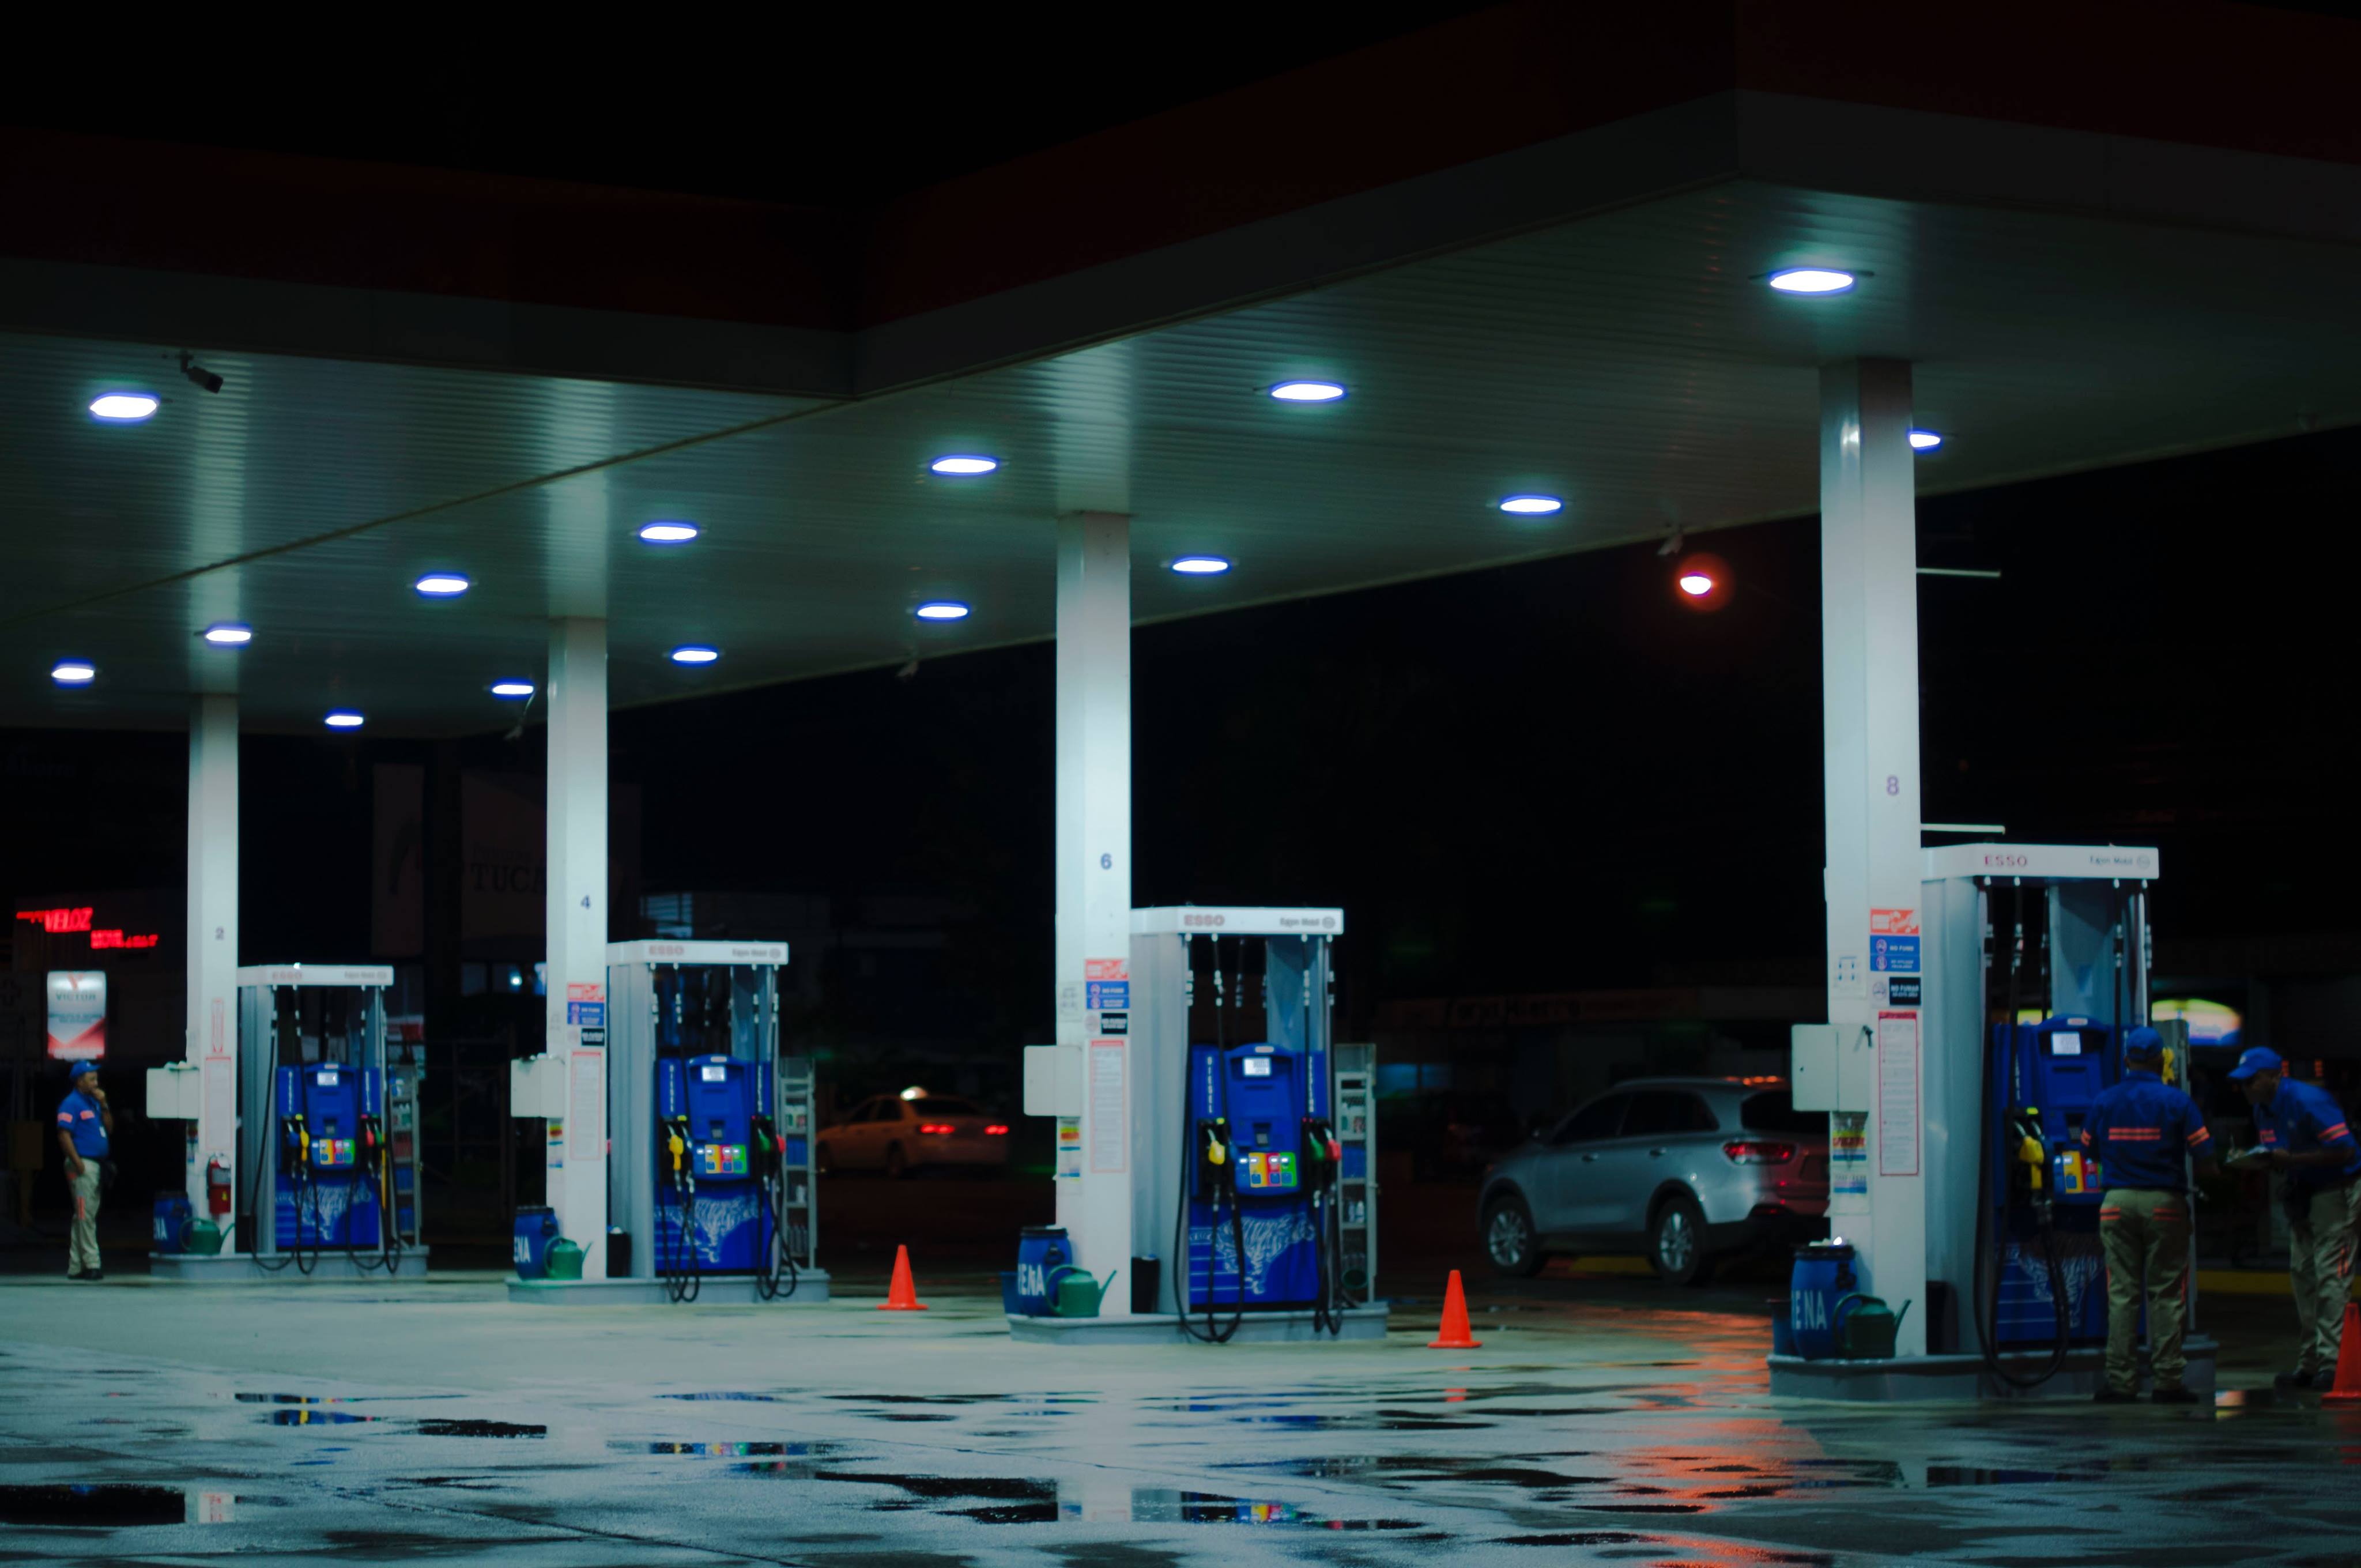 В Онтарио произошло невиданное падение цен на бензин